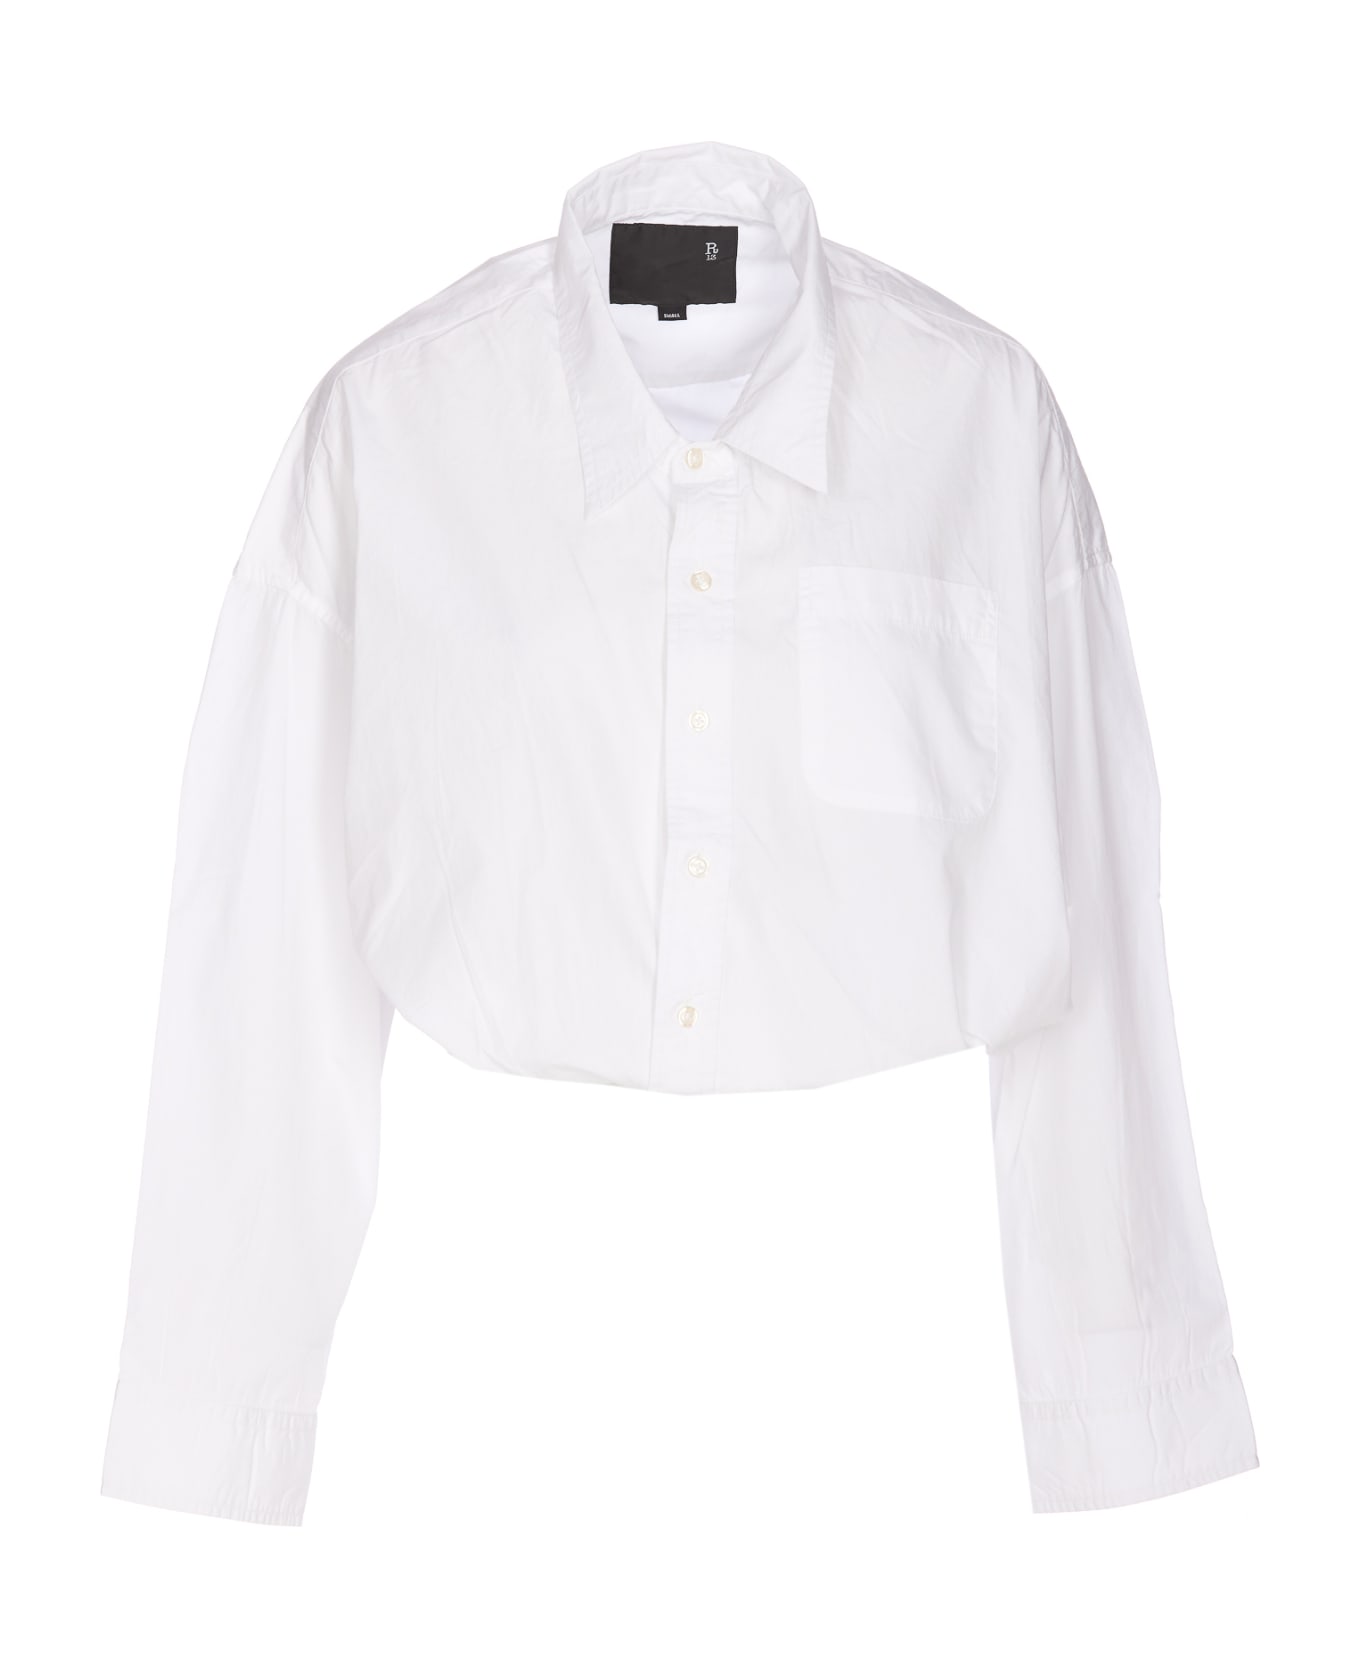 R13 Crossover Bubble Shirt Shirt - WHITE